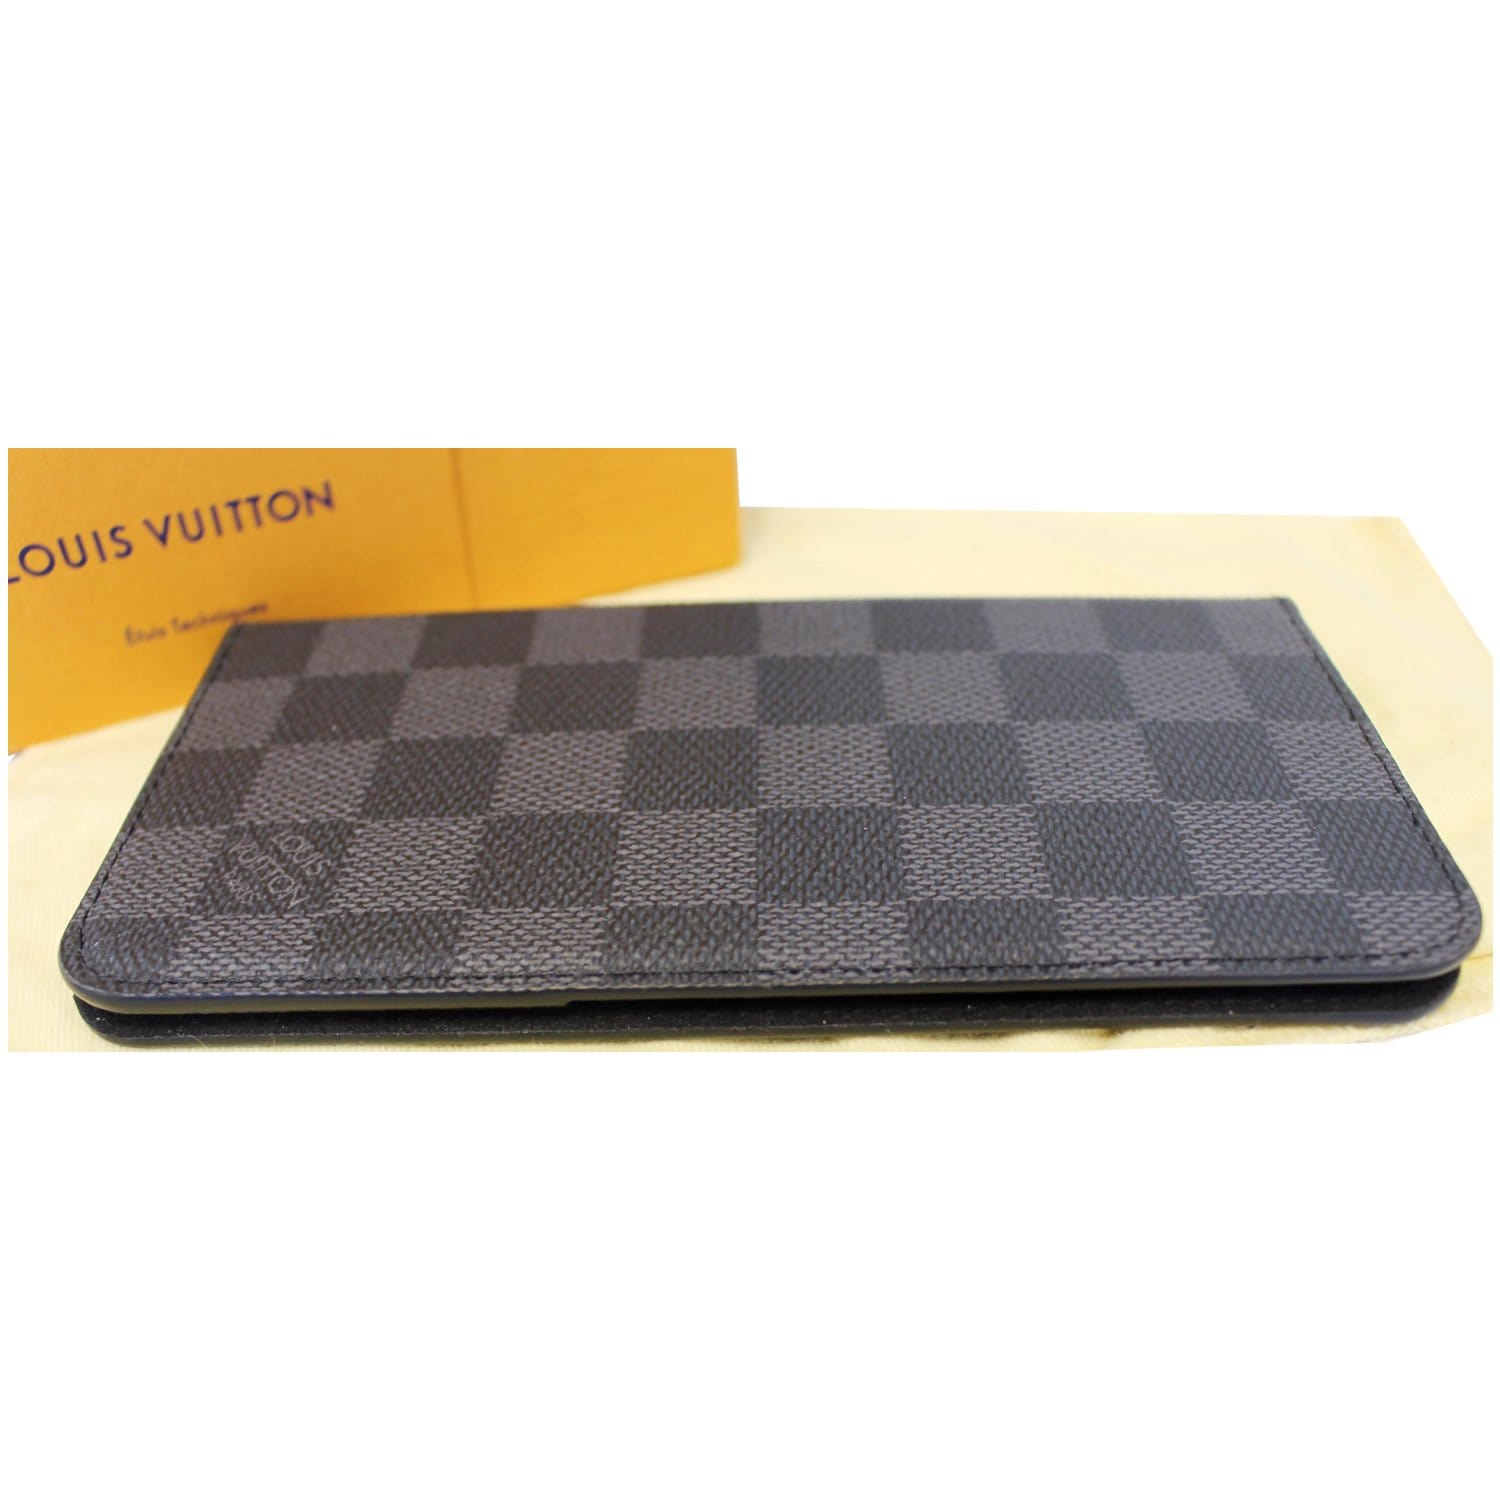 Louis Vuitton Black Damier Graphite iPhone 3G Case or Card Holder